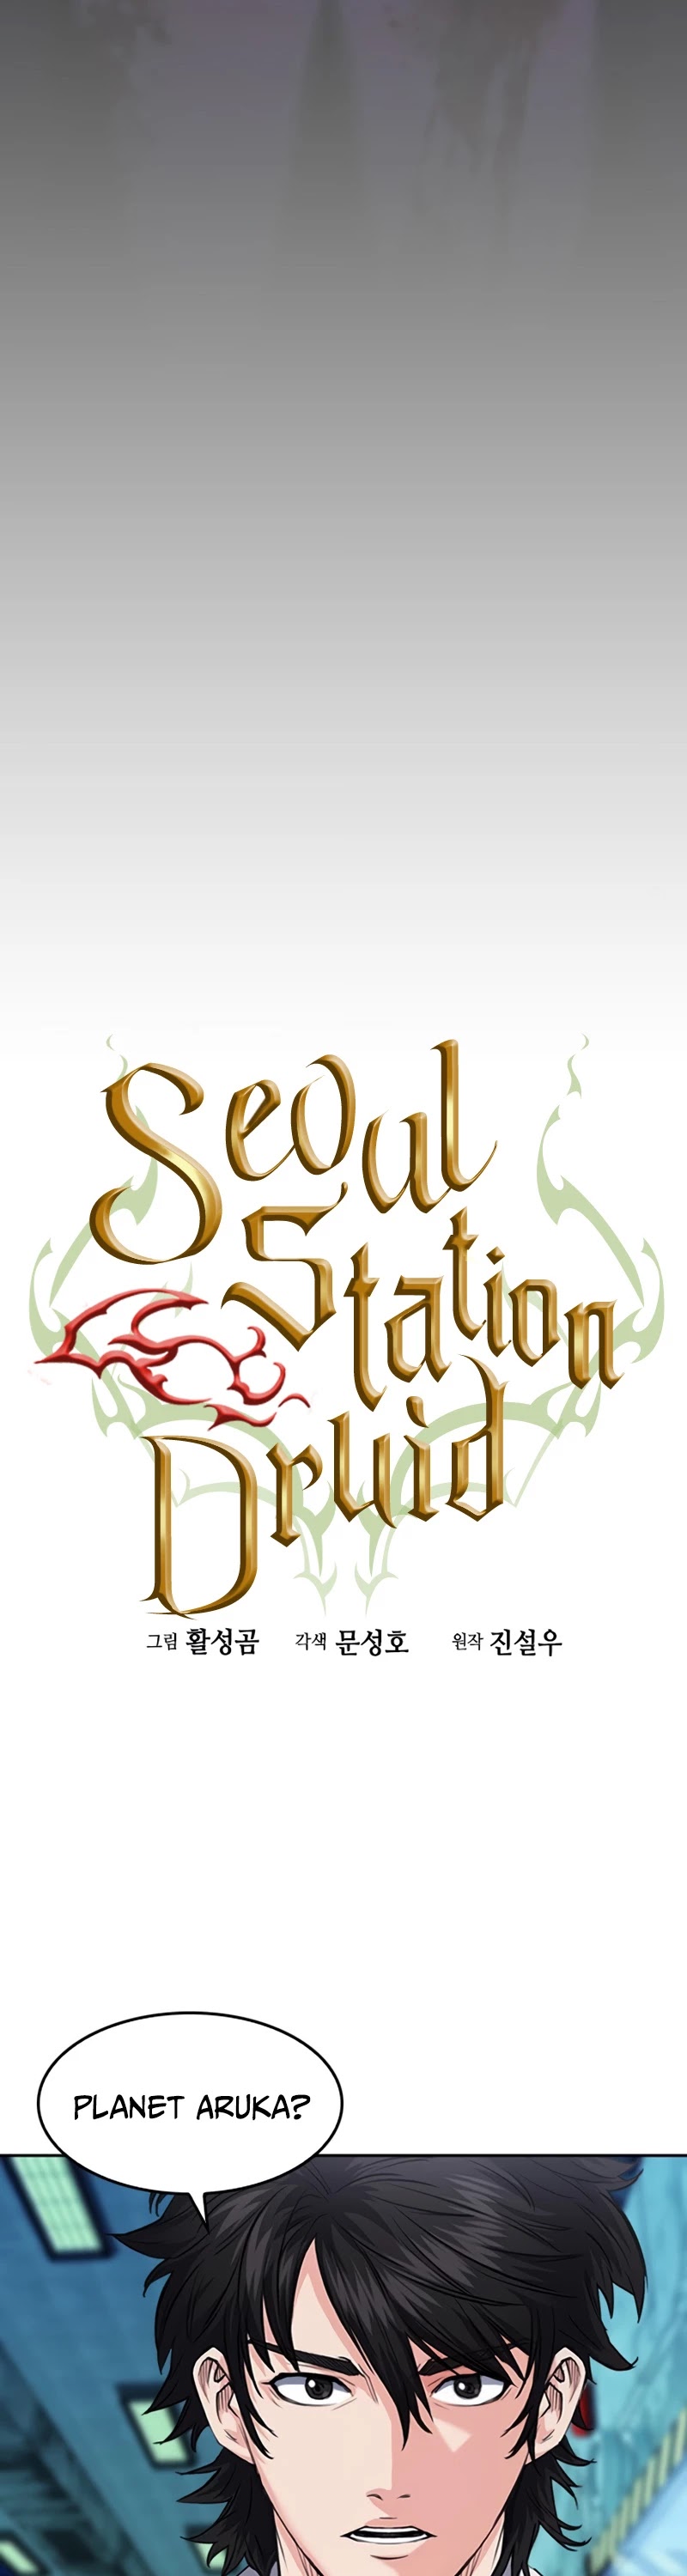 Seoul Station Druid - Page 3